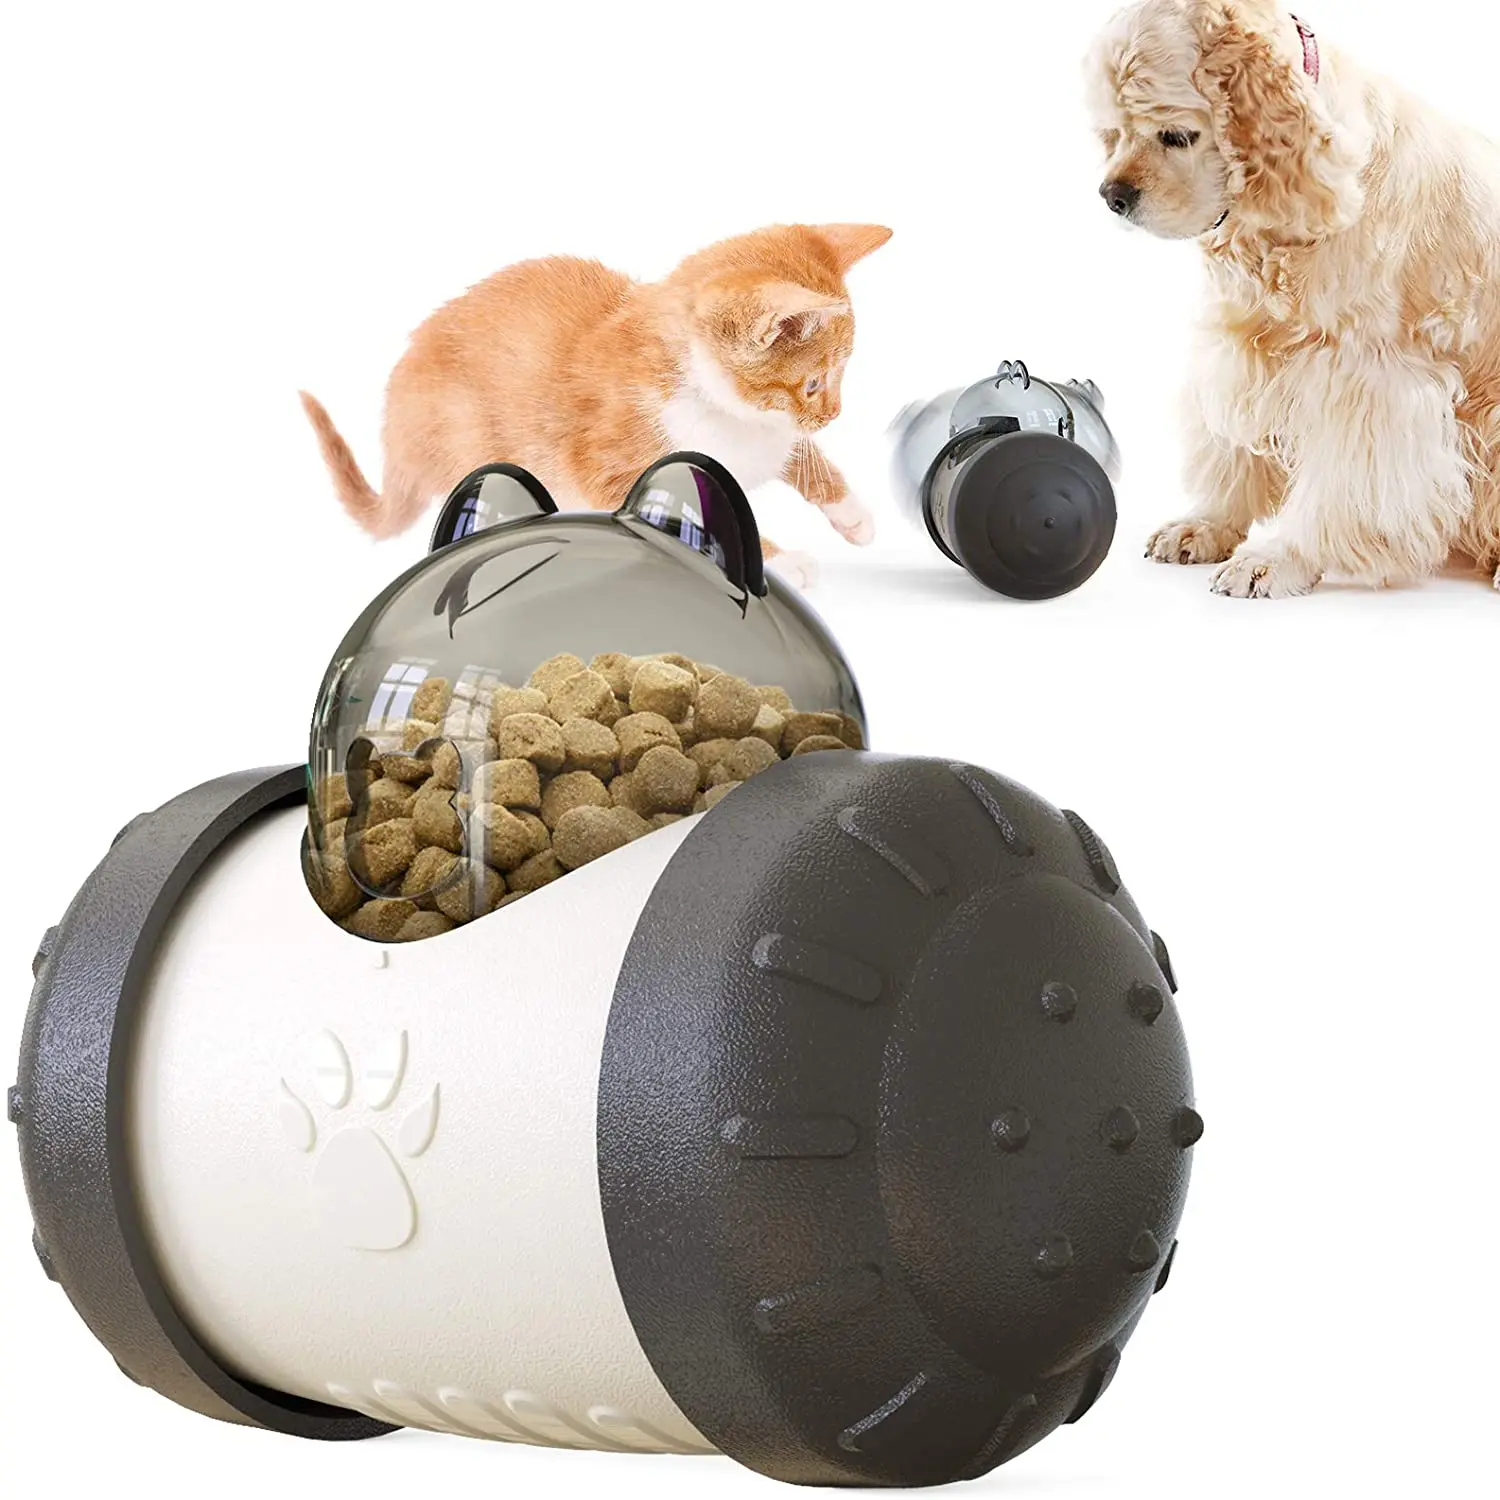 

Ulmpp Cat Toys Dog Balance Car Pet Leak Feeder Kitten Puppy Tumbler Slow Bowl Puzzle Toy Exercise Game Feeding Dog Accessories